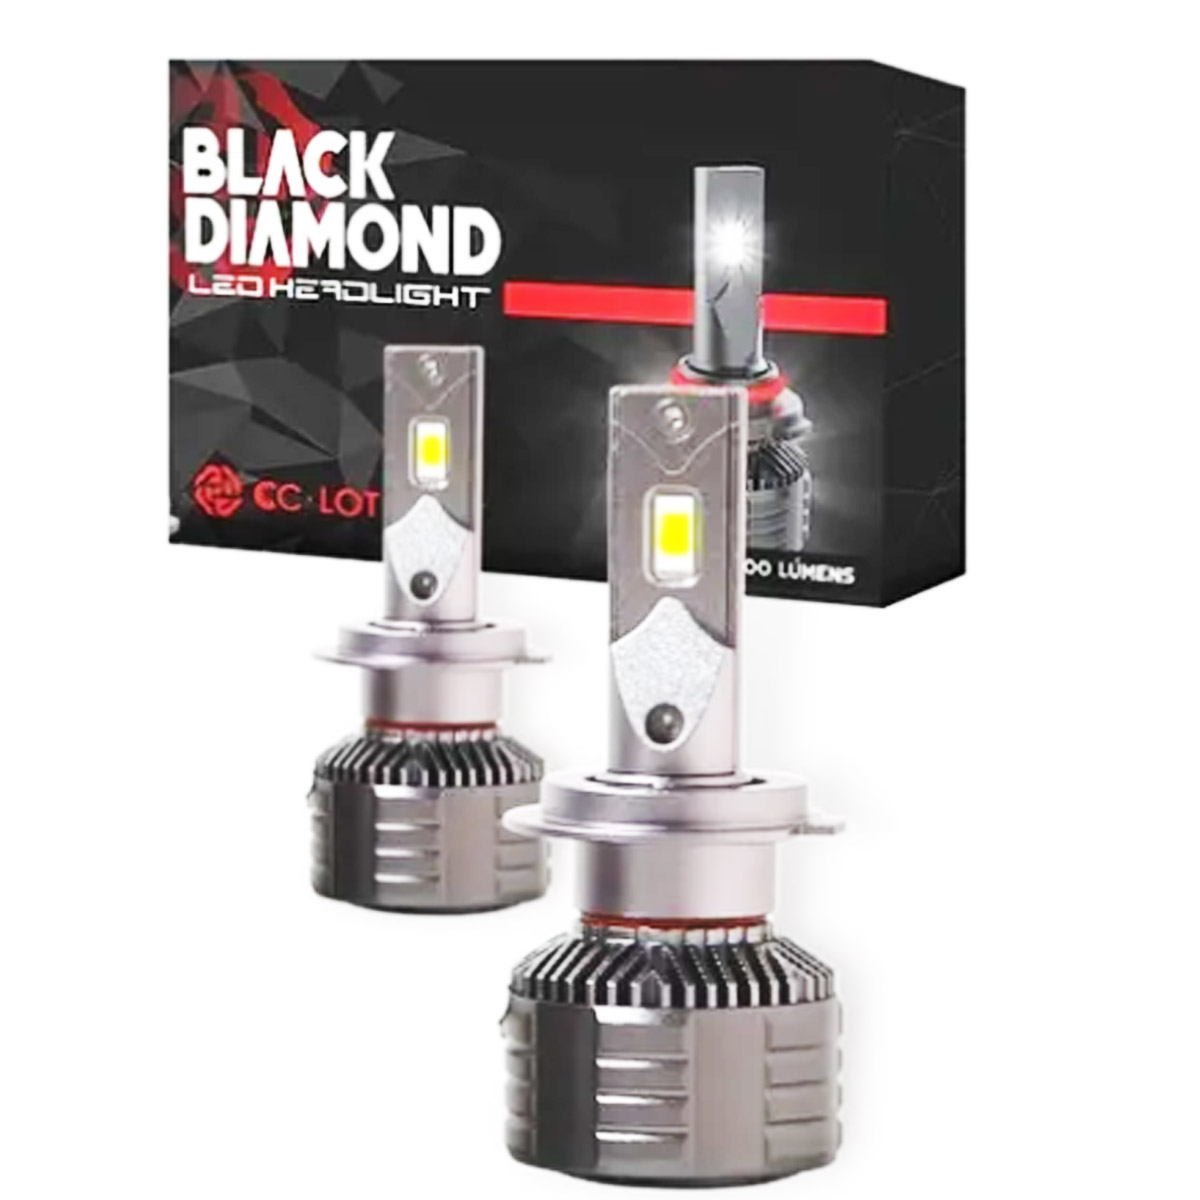 Par de Lâmpada Headlight Led CC-LOT Black Diamond H27 9000 Lúmens JR8